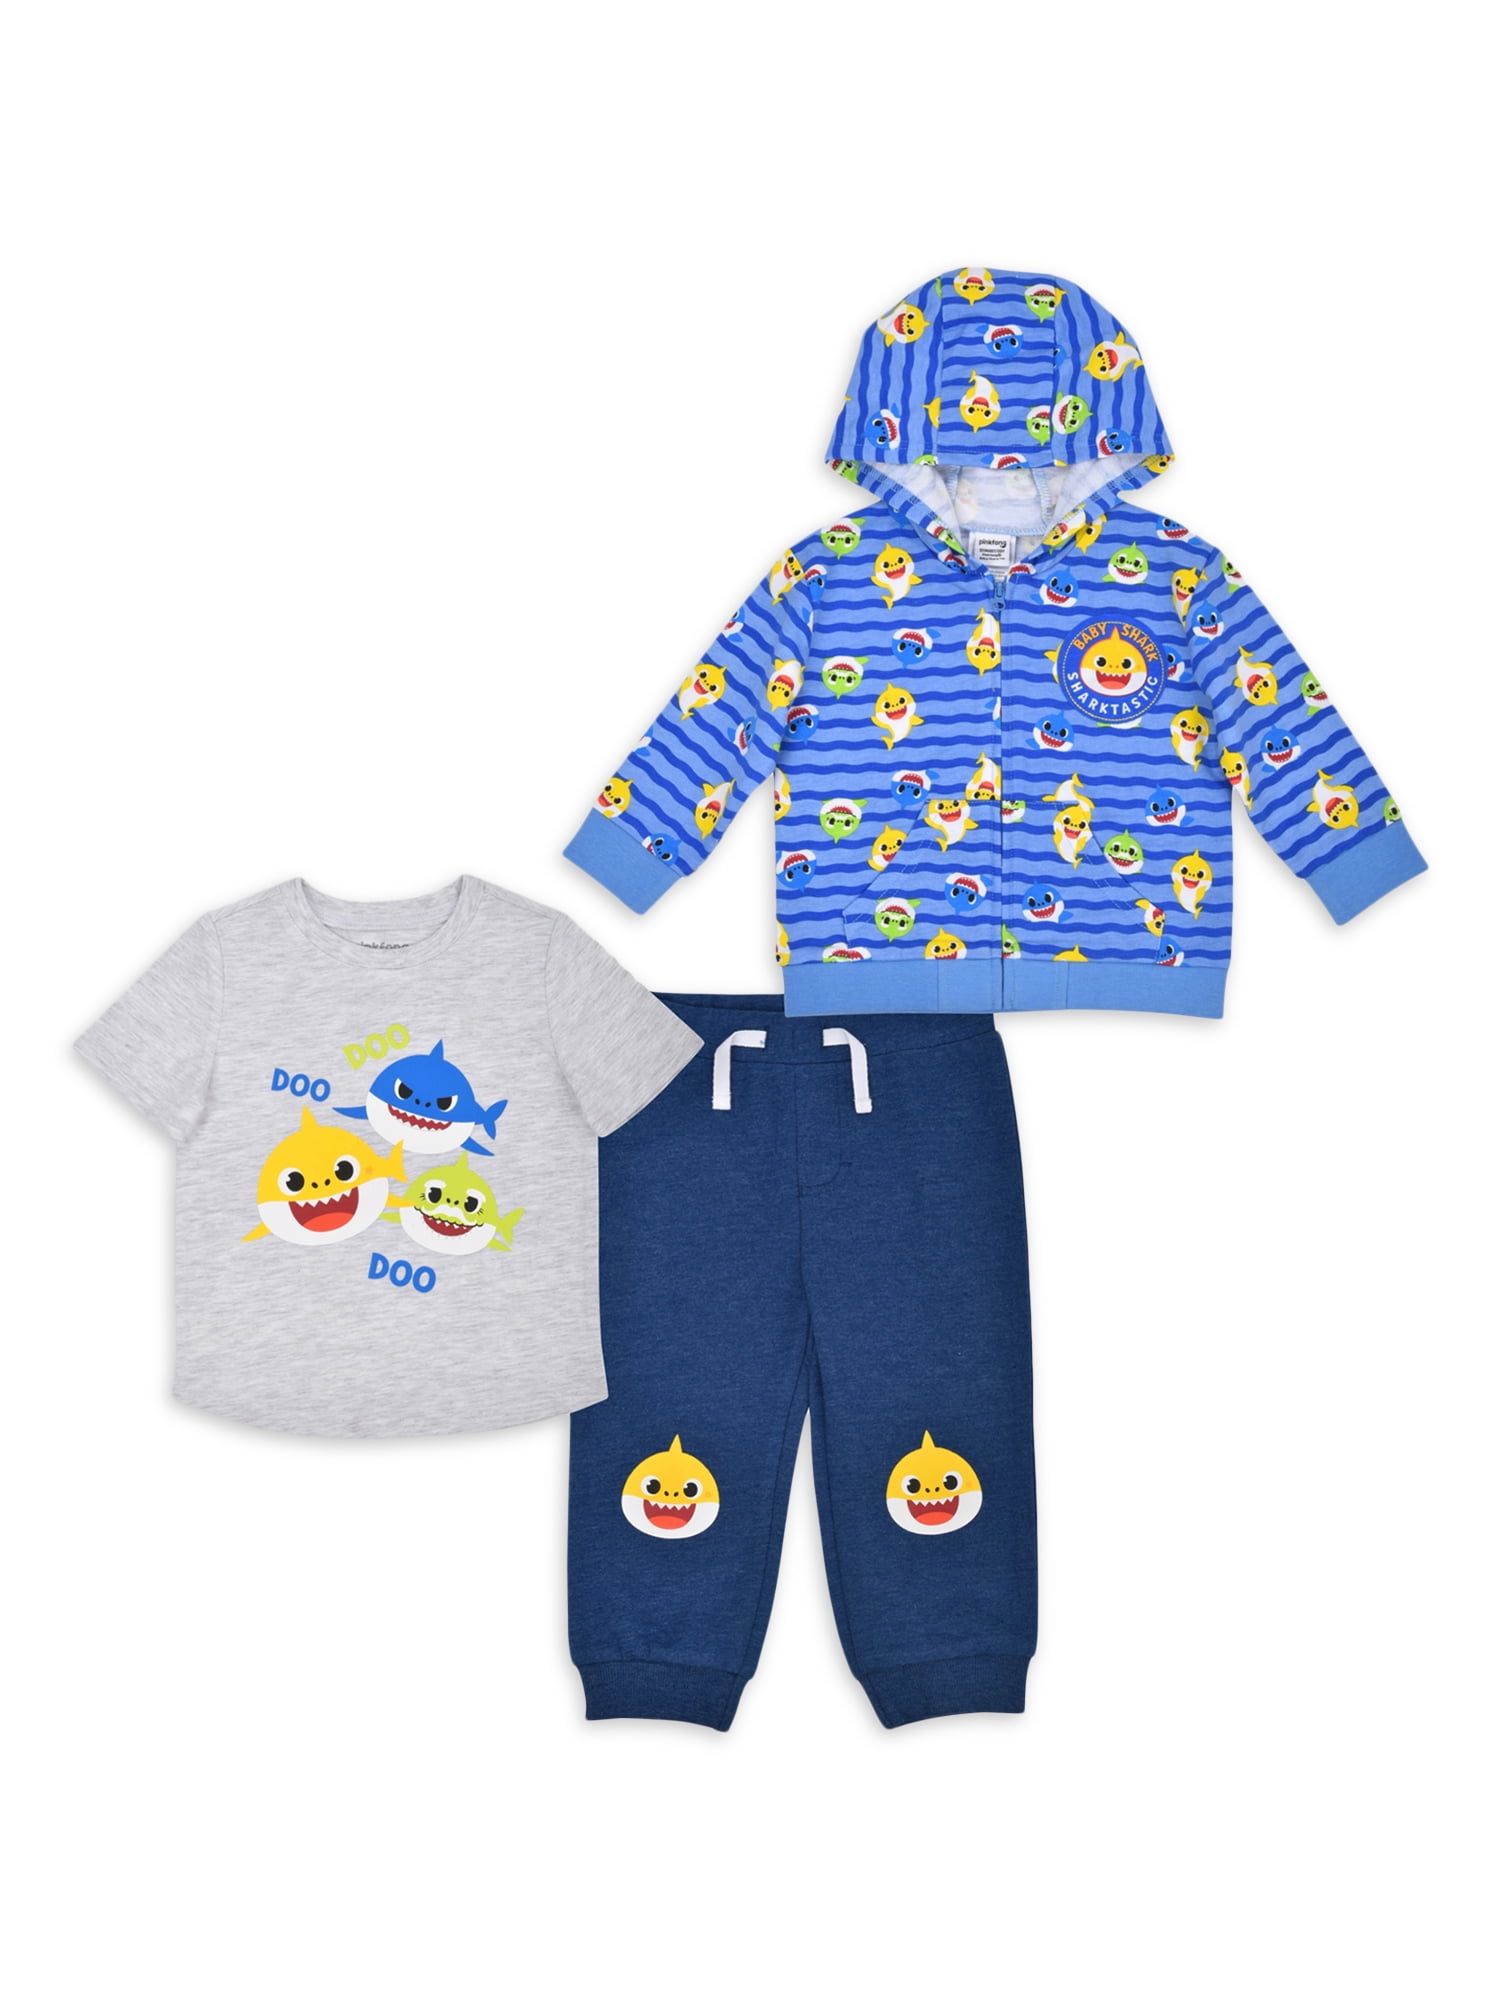 Baby Shark Baby Boy Outfit Set Fleece Zip Hoodie, T-Shirt, and Pants ...